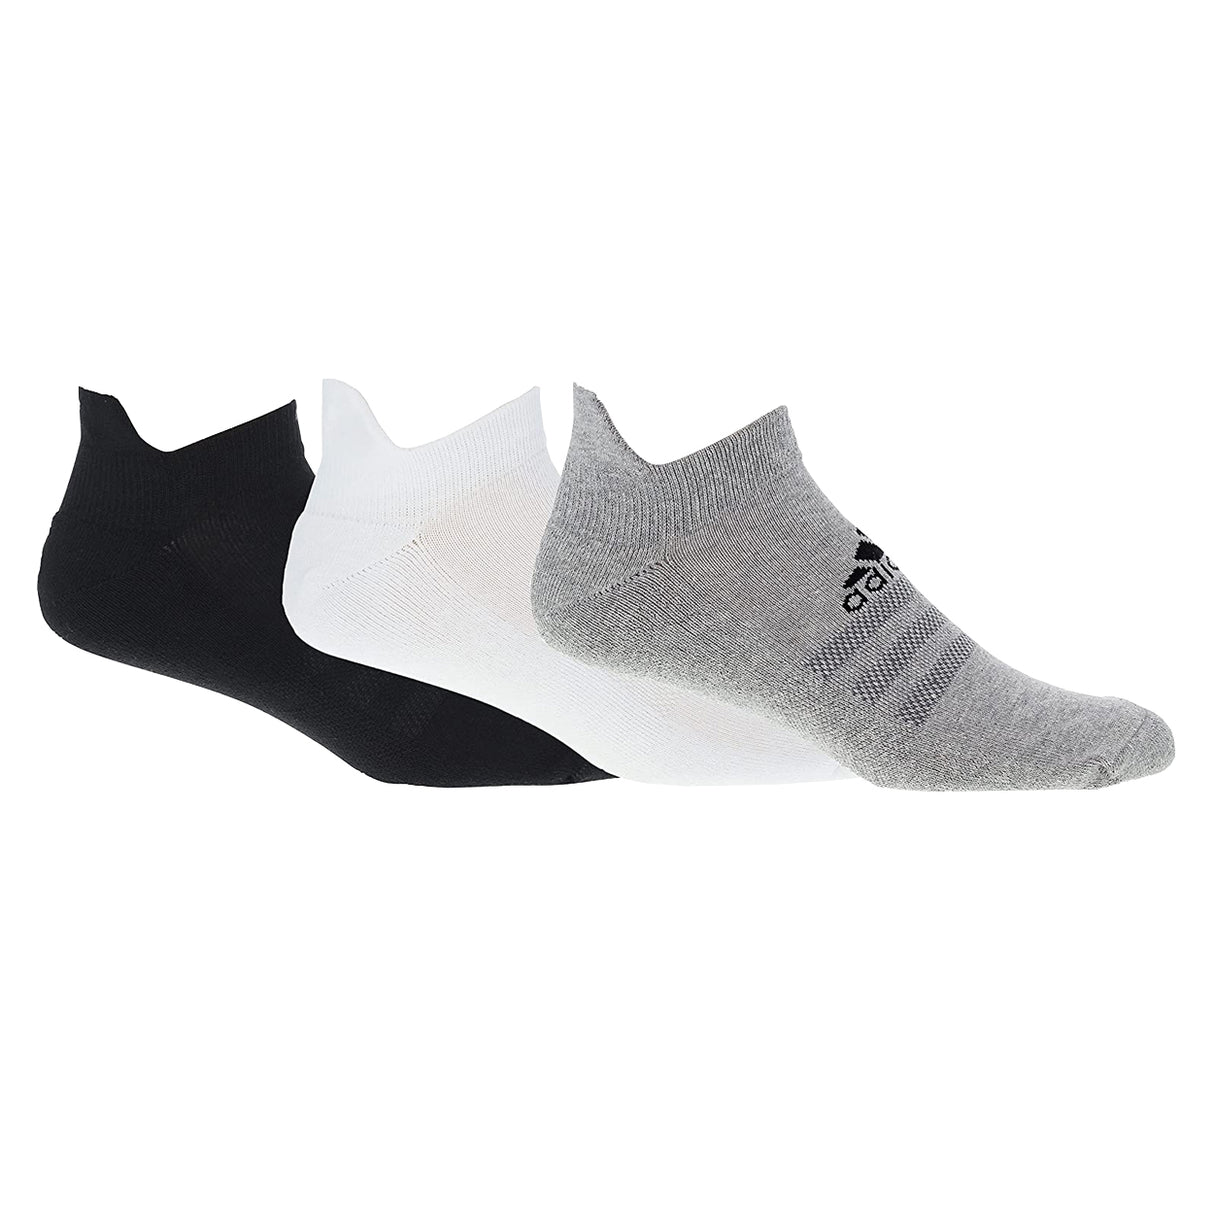 Adidas Golf 3-Pack Performance Men's Ankle Socks